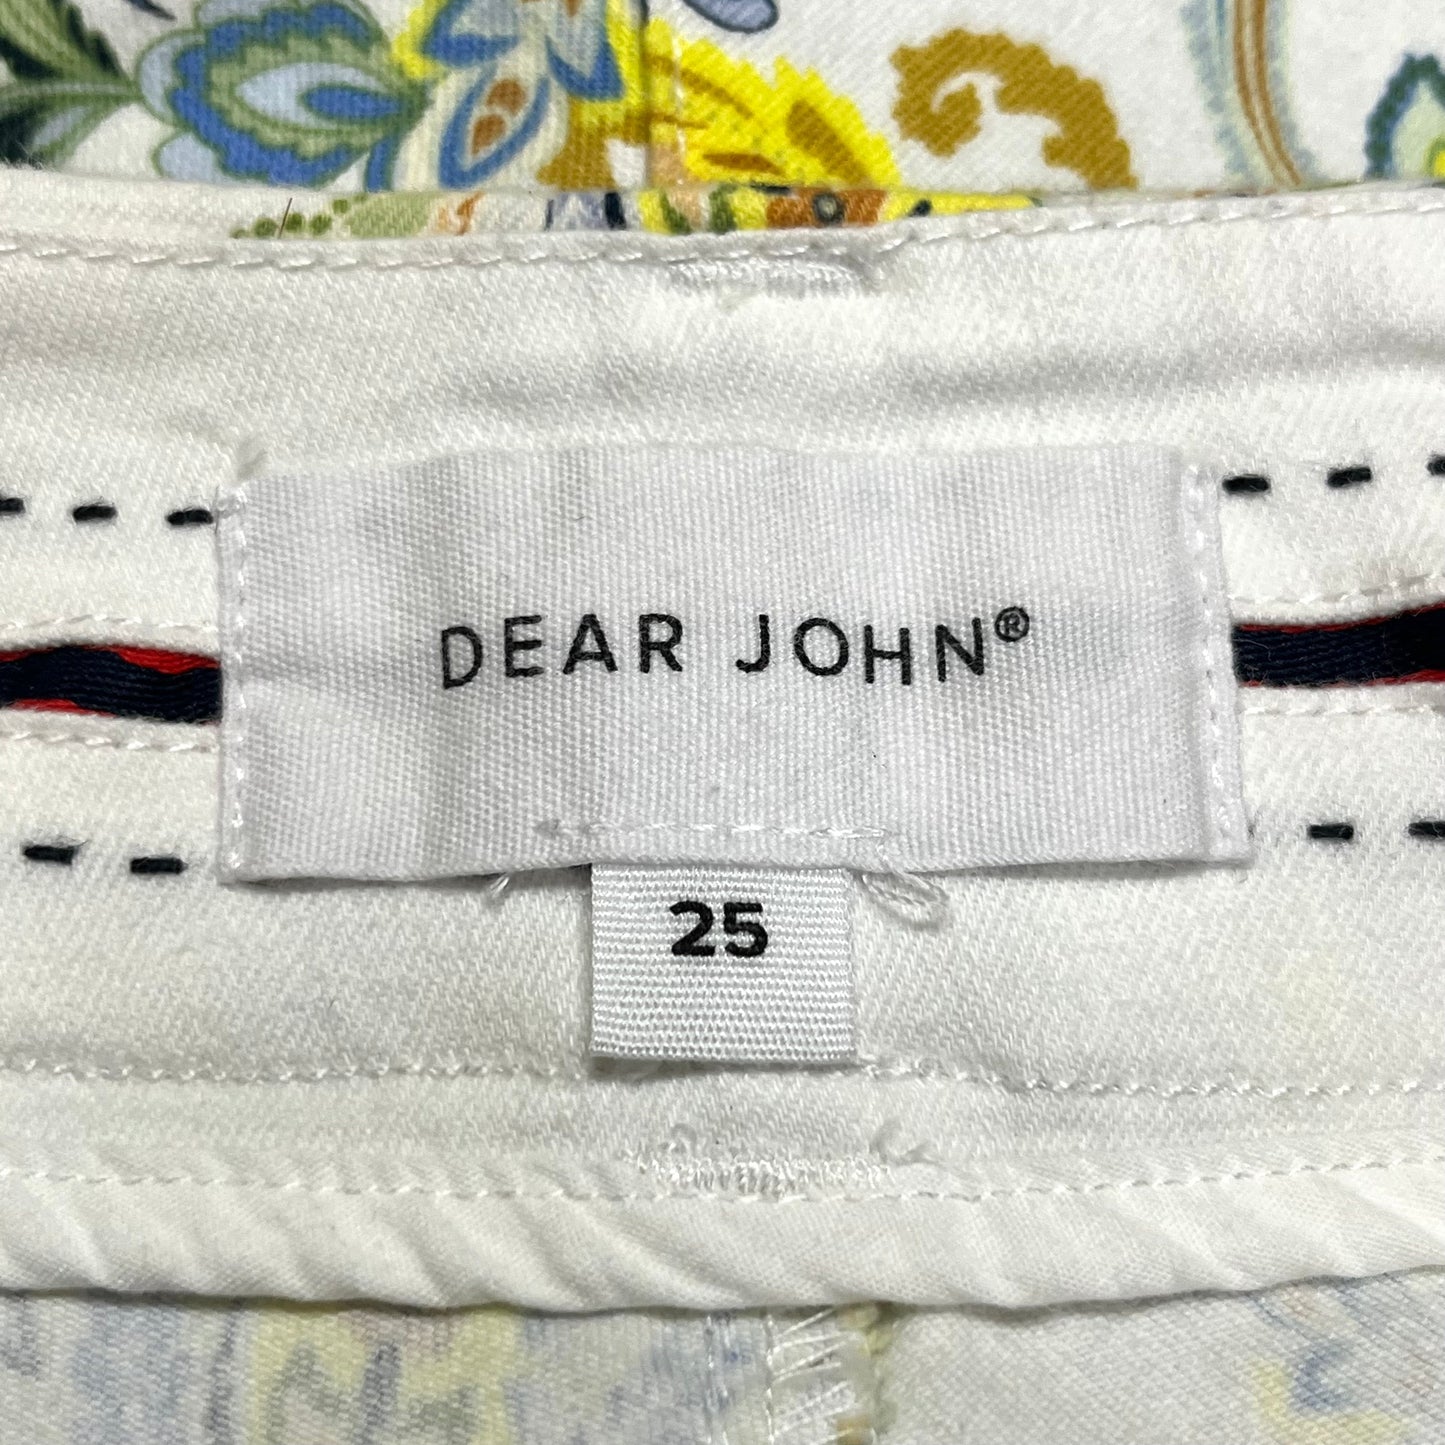 Floral Print Shorts By Dear John, Size: 2